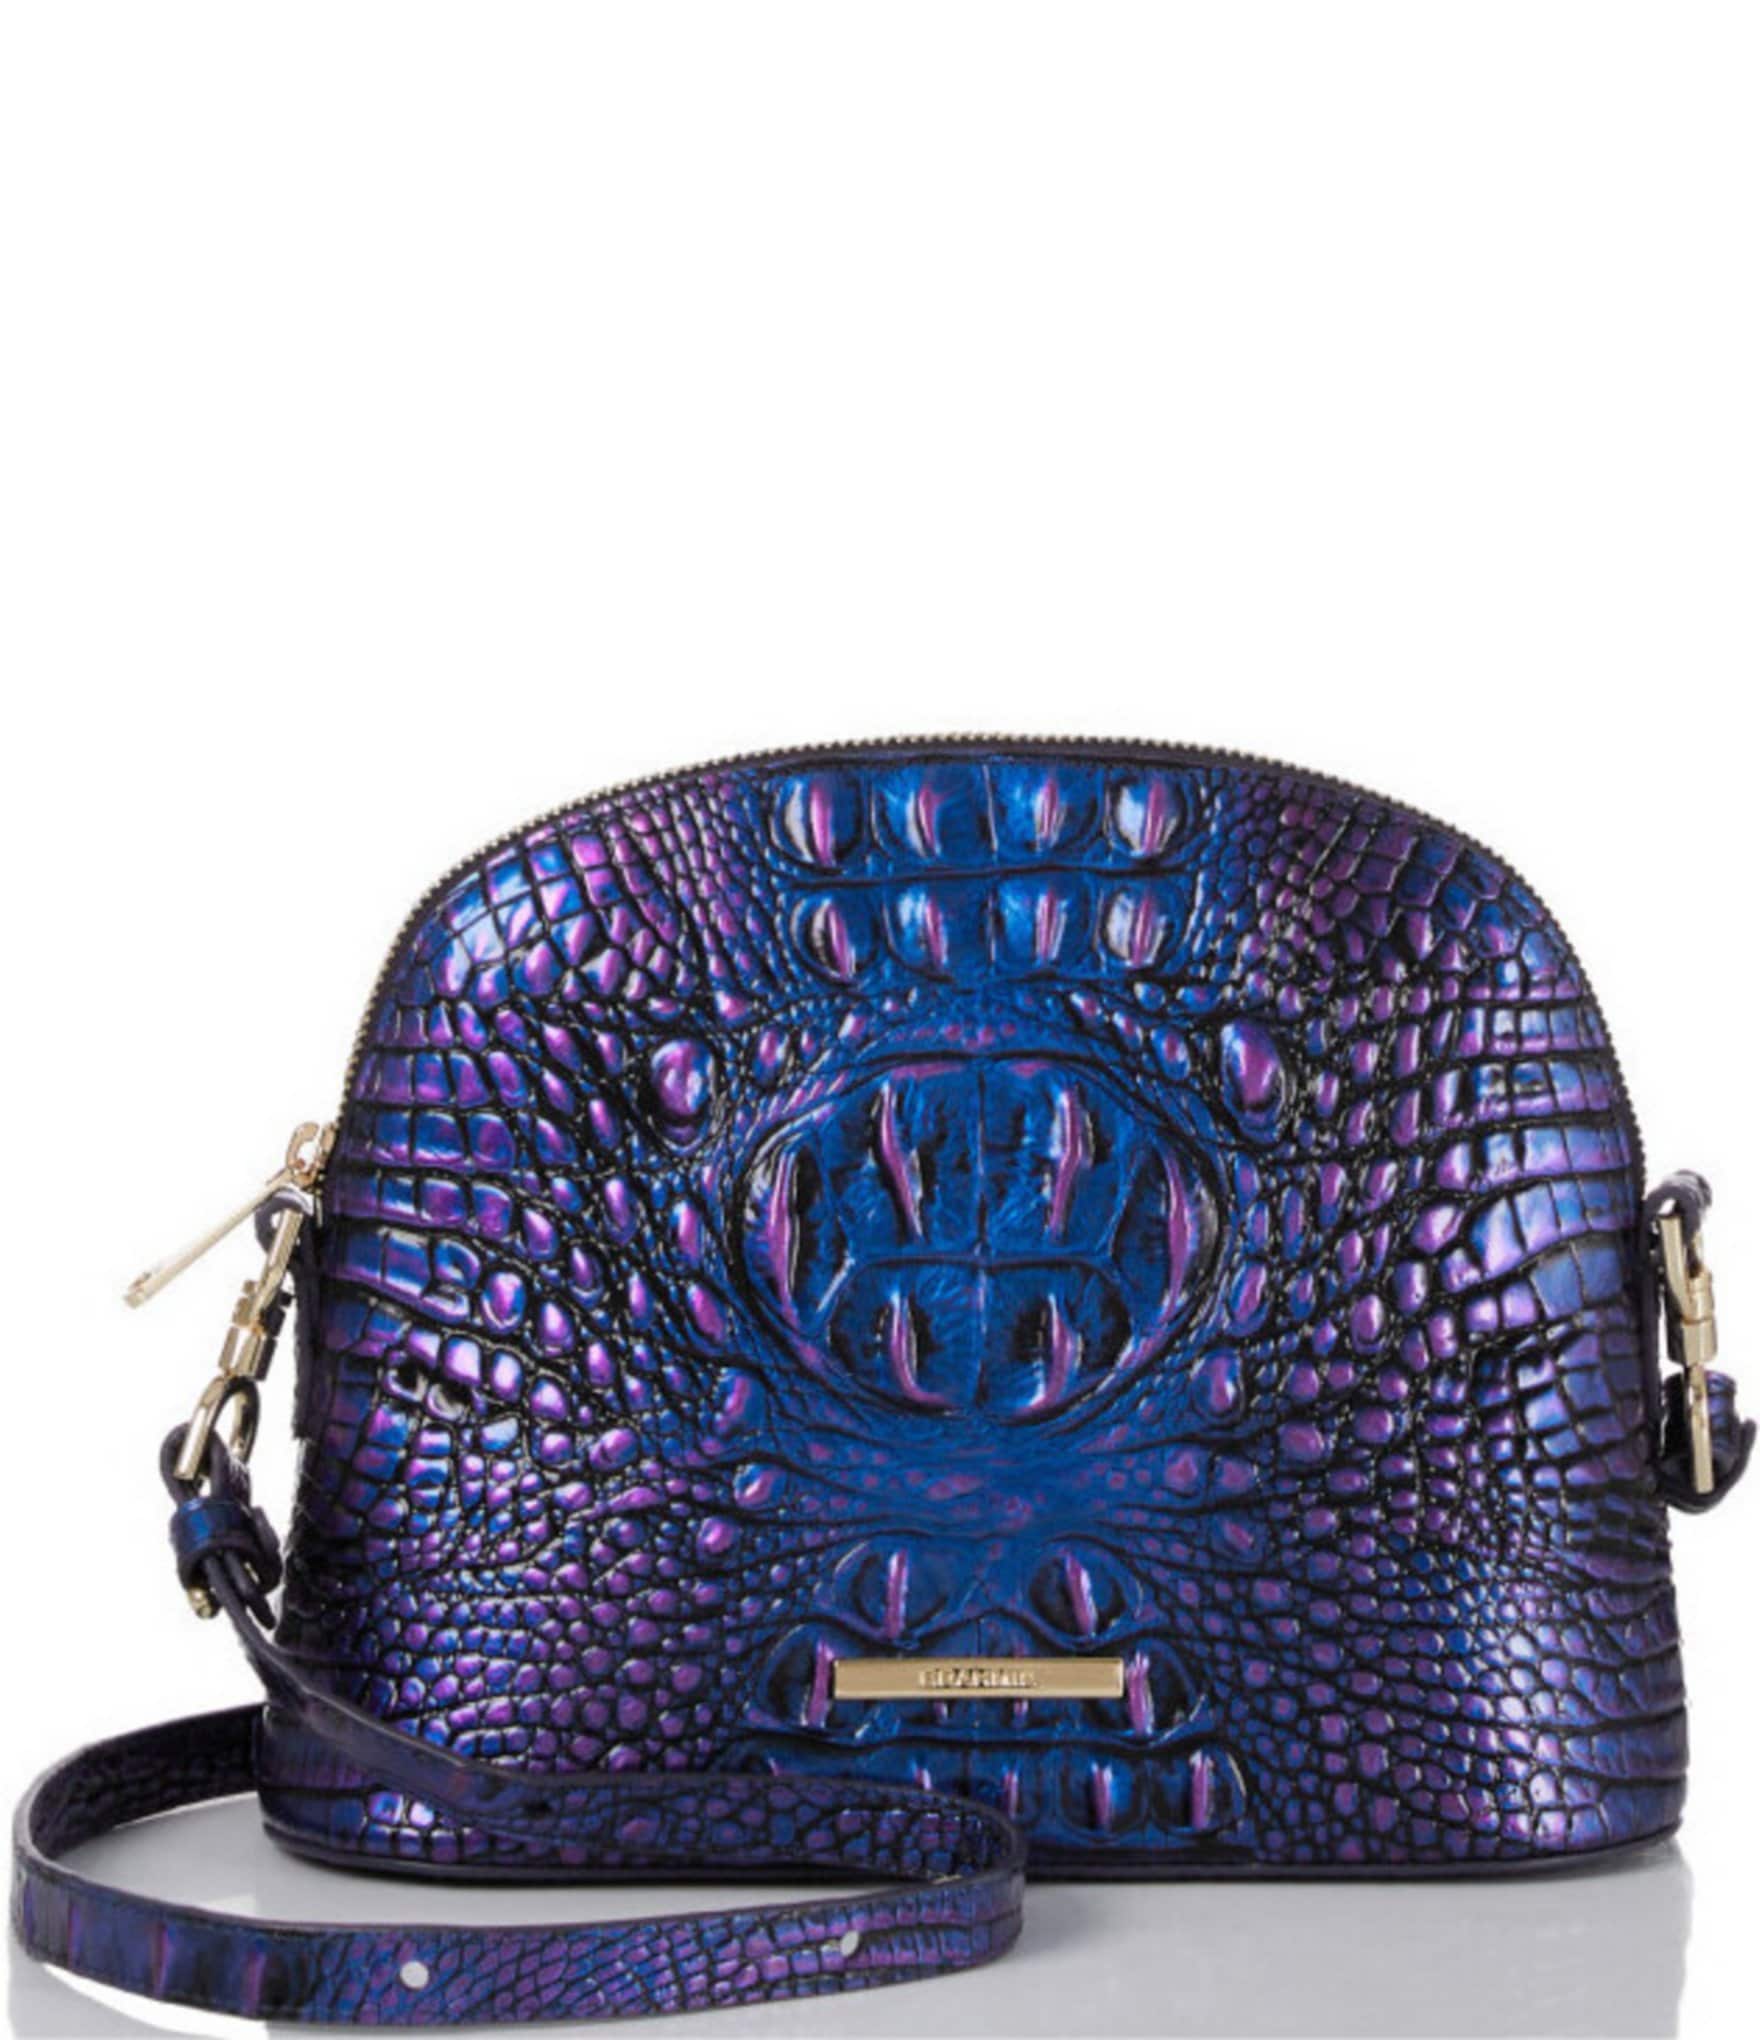 Brahmin Duxbury Satchel Alligator Blue and Gold Crossbody Bag Top Handle Leather